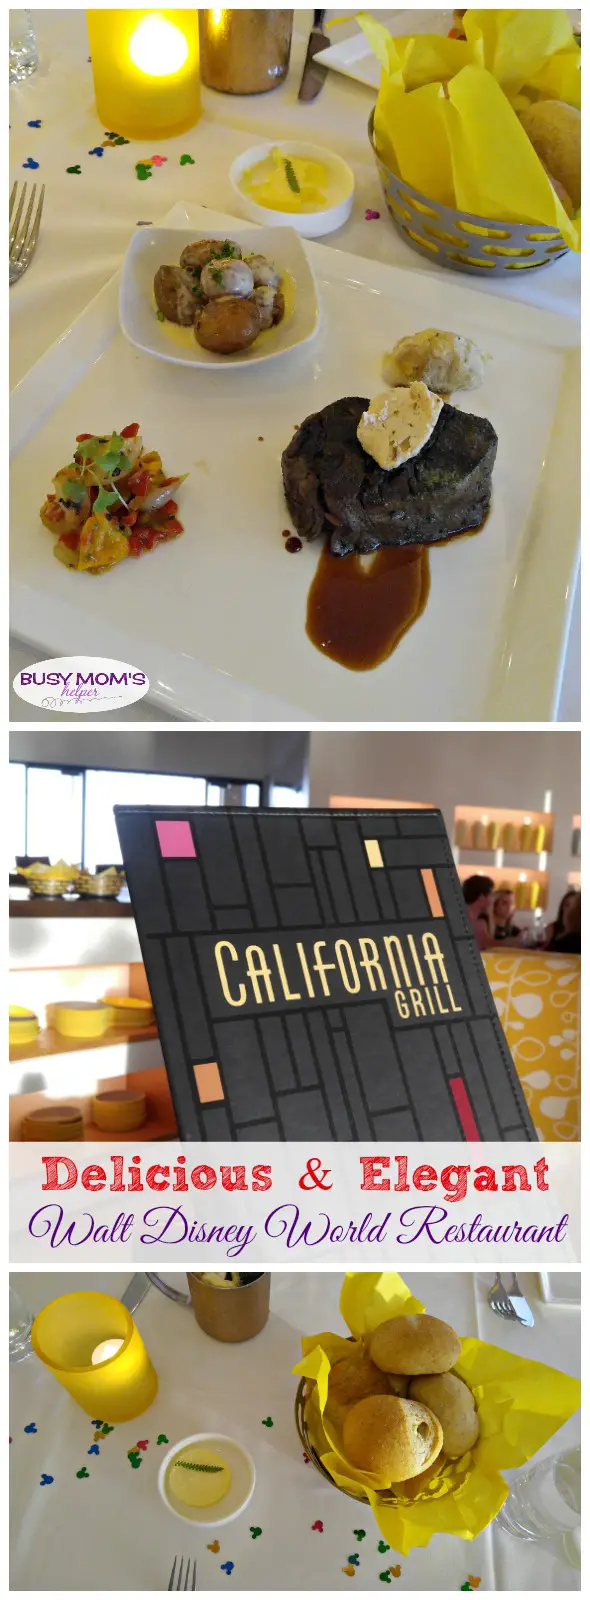 Walt Disney World California Grill Restaurant / a wonderful, delicious & romantic dining experience